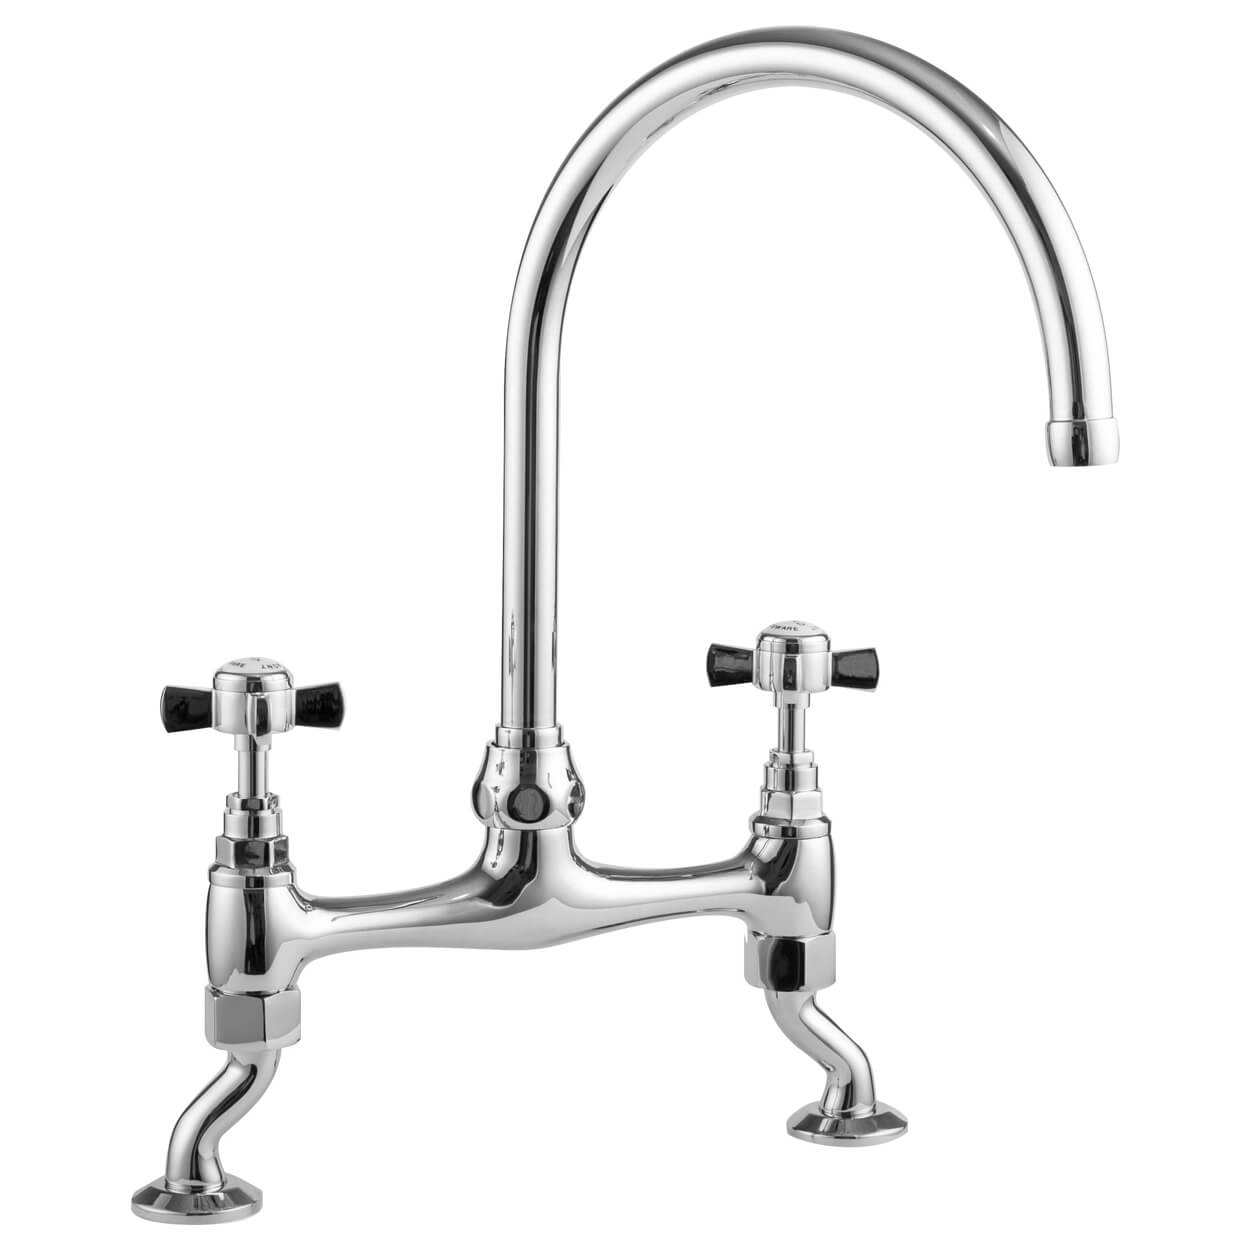 Chrome Traditional Bridge Kitchen Sink Mixer Tap Ceramic Levers 1/4 turn taps